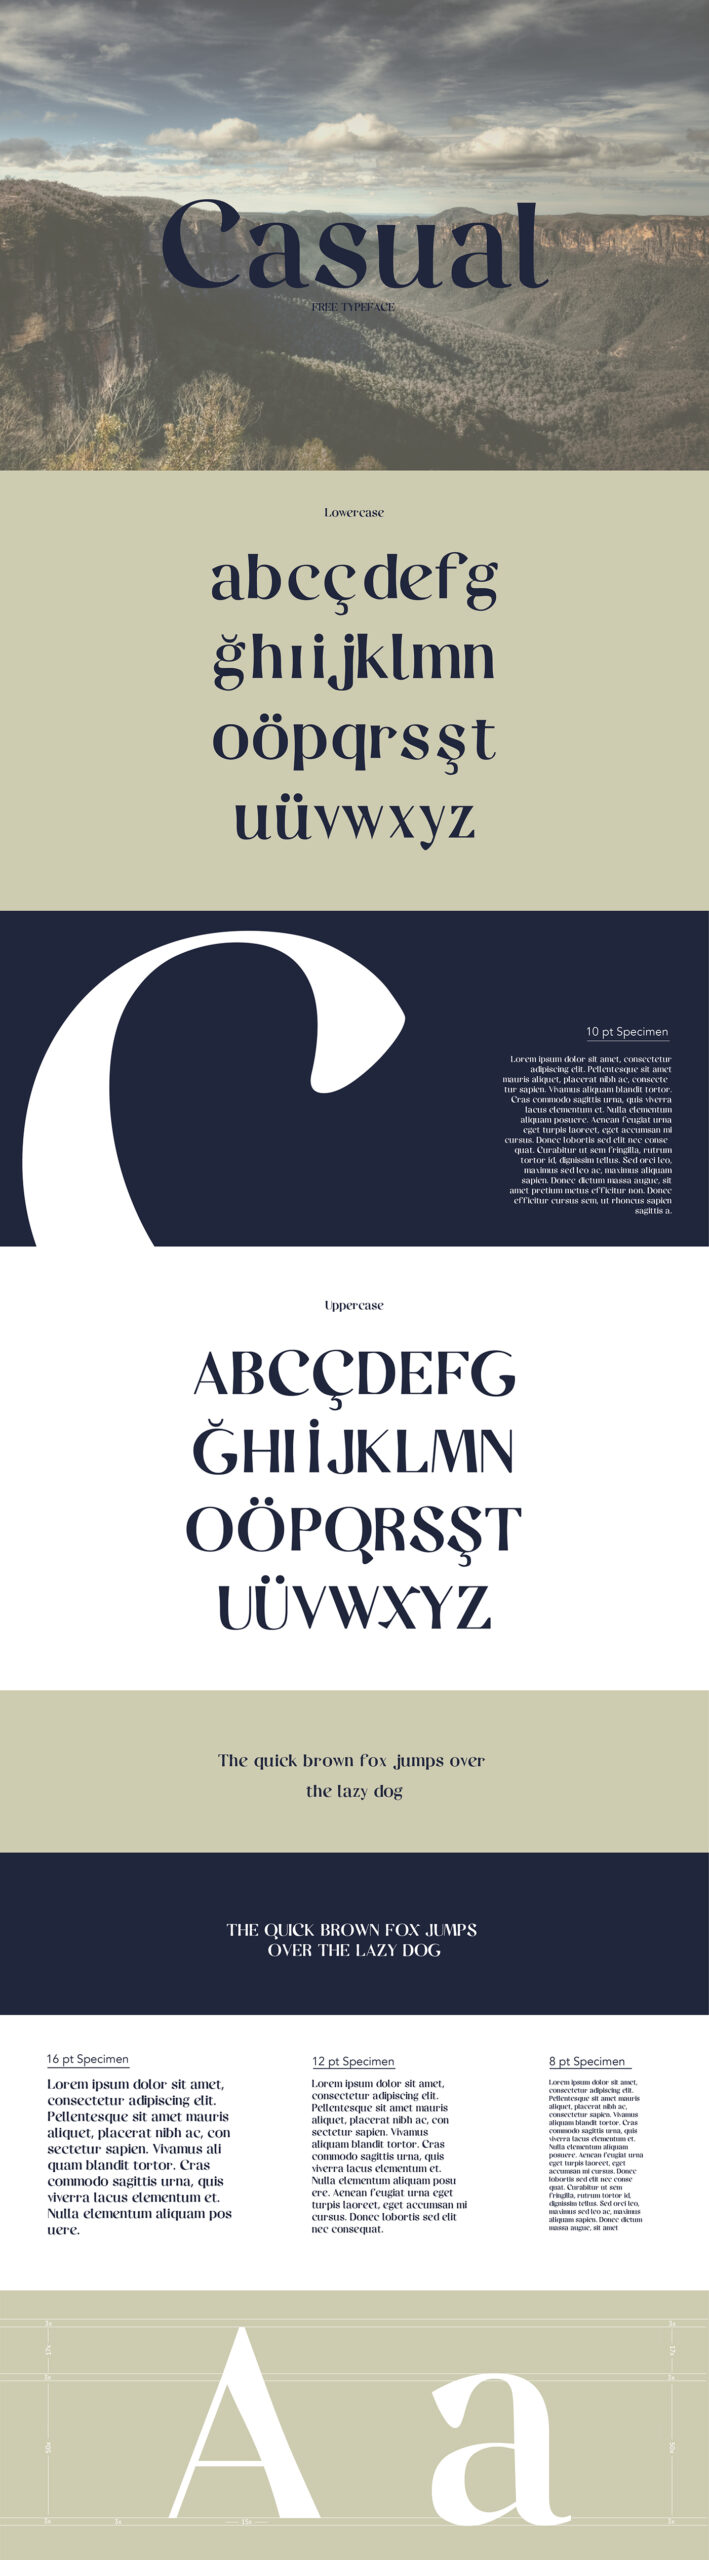 Casual Serif Font Free